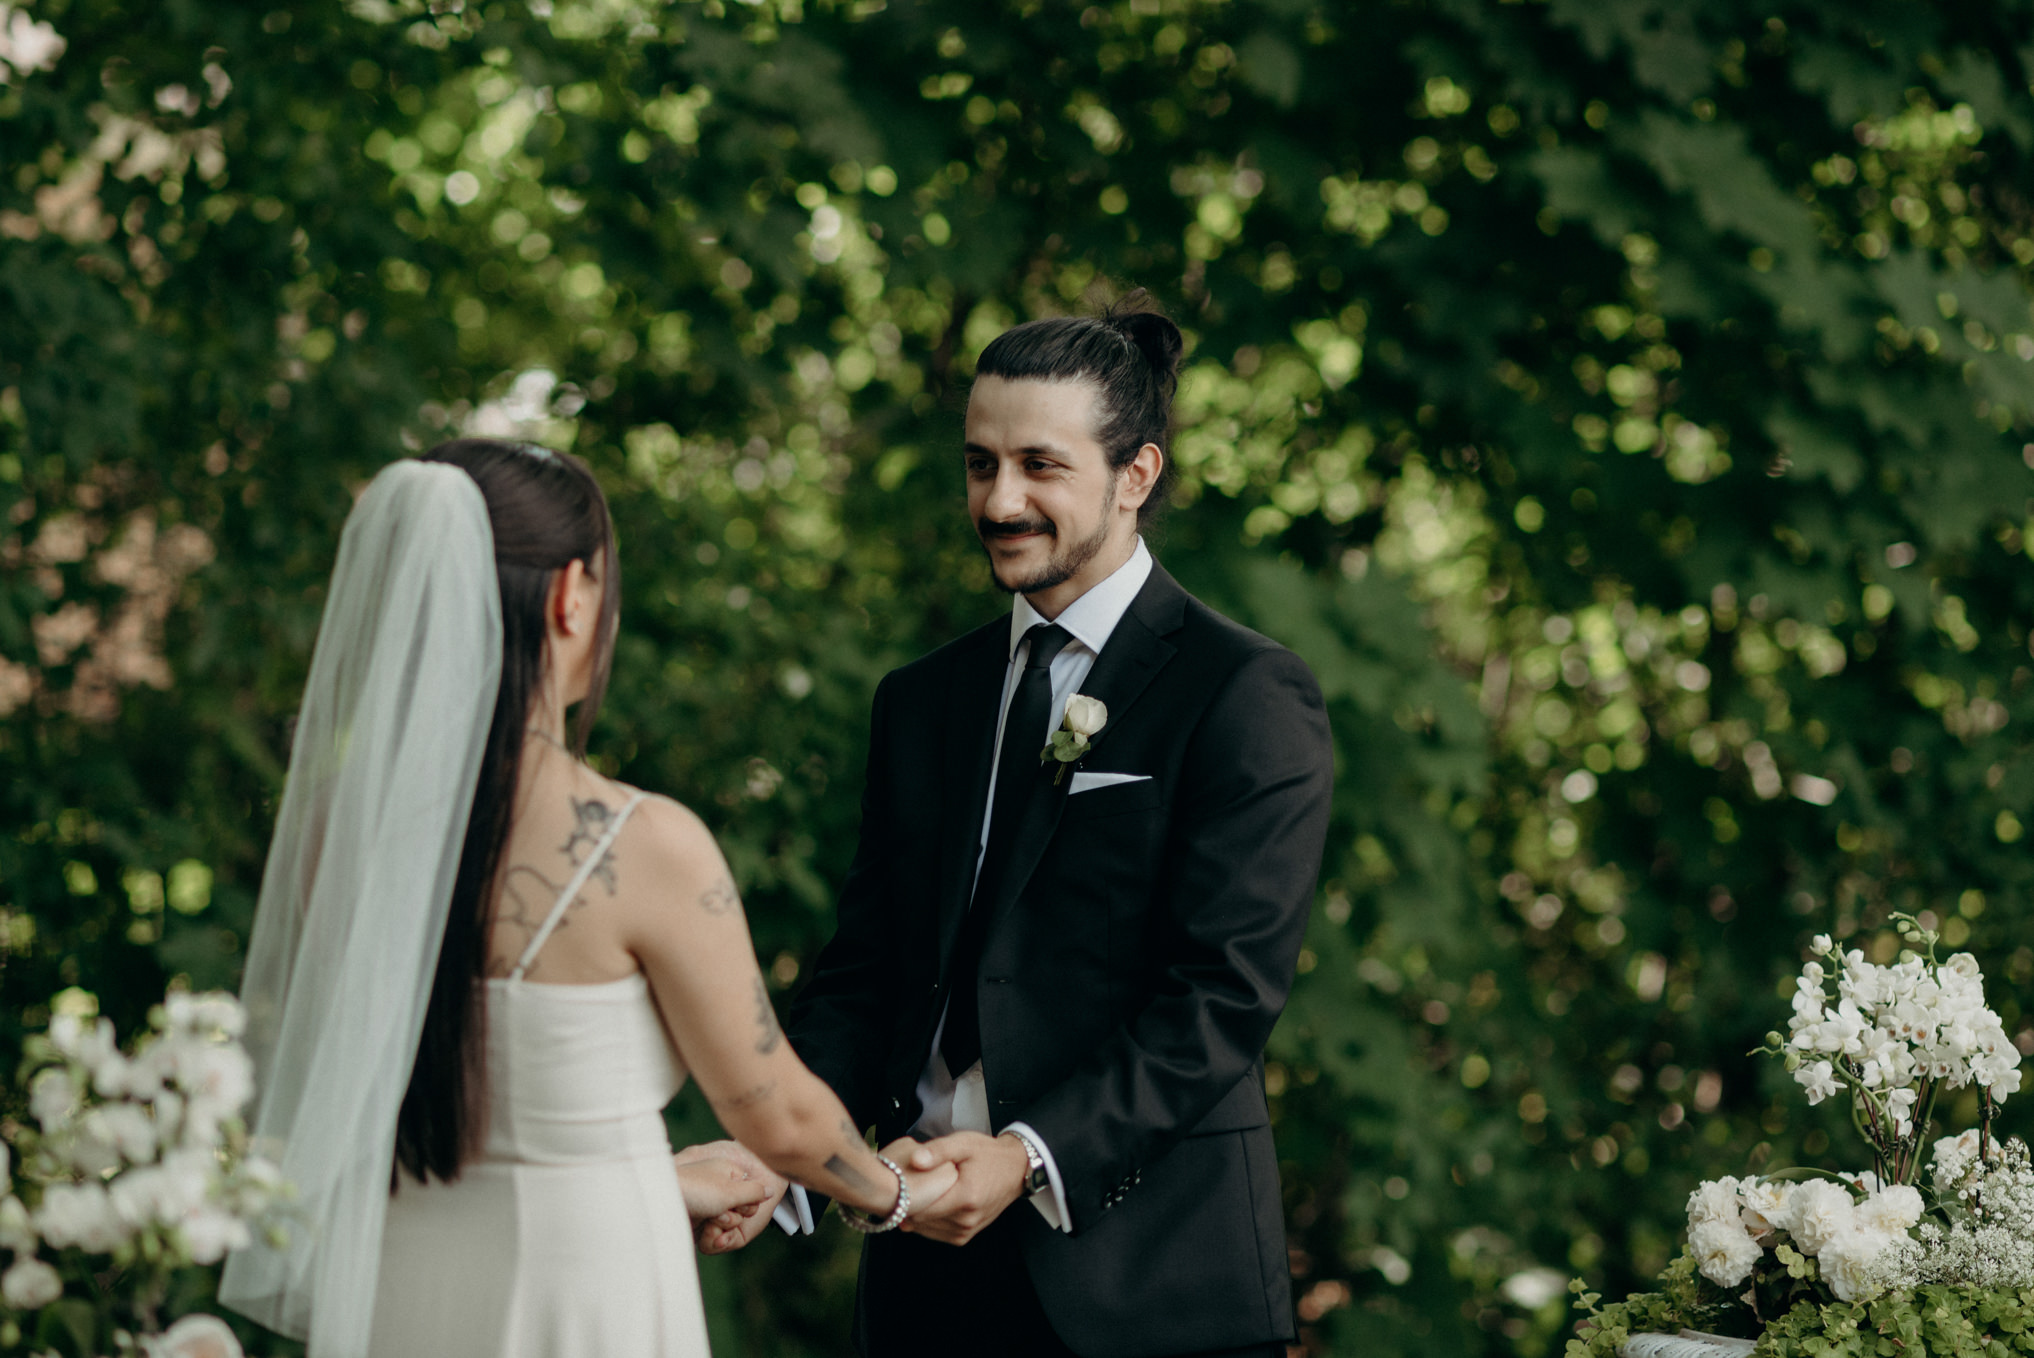 Groom smiling at bride during backyard wedding ceremony